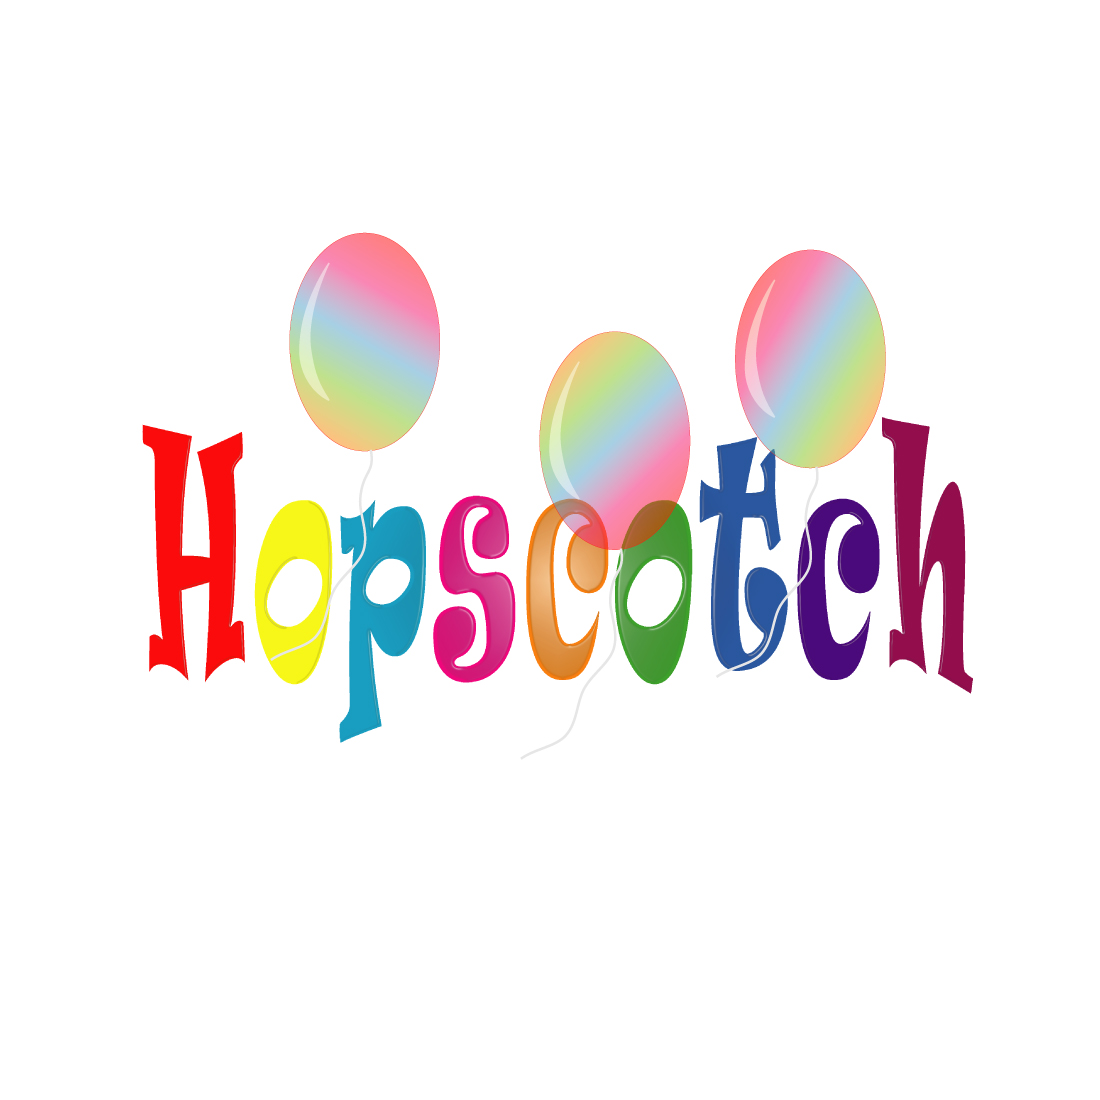 Hopscotch - TShirt Print Design cover image.